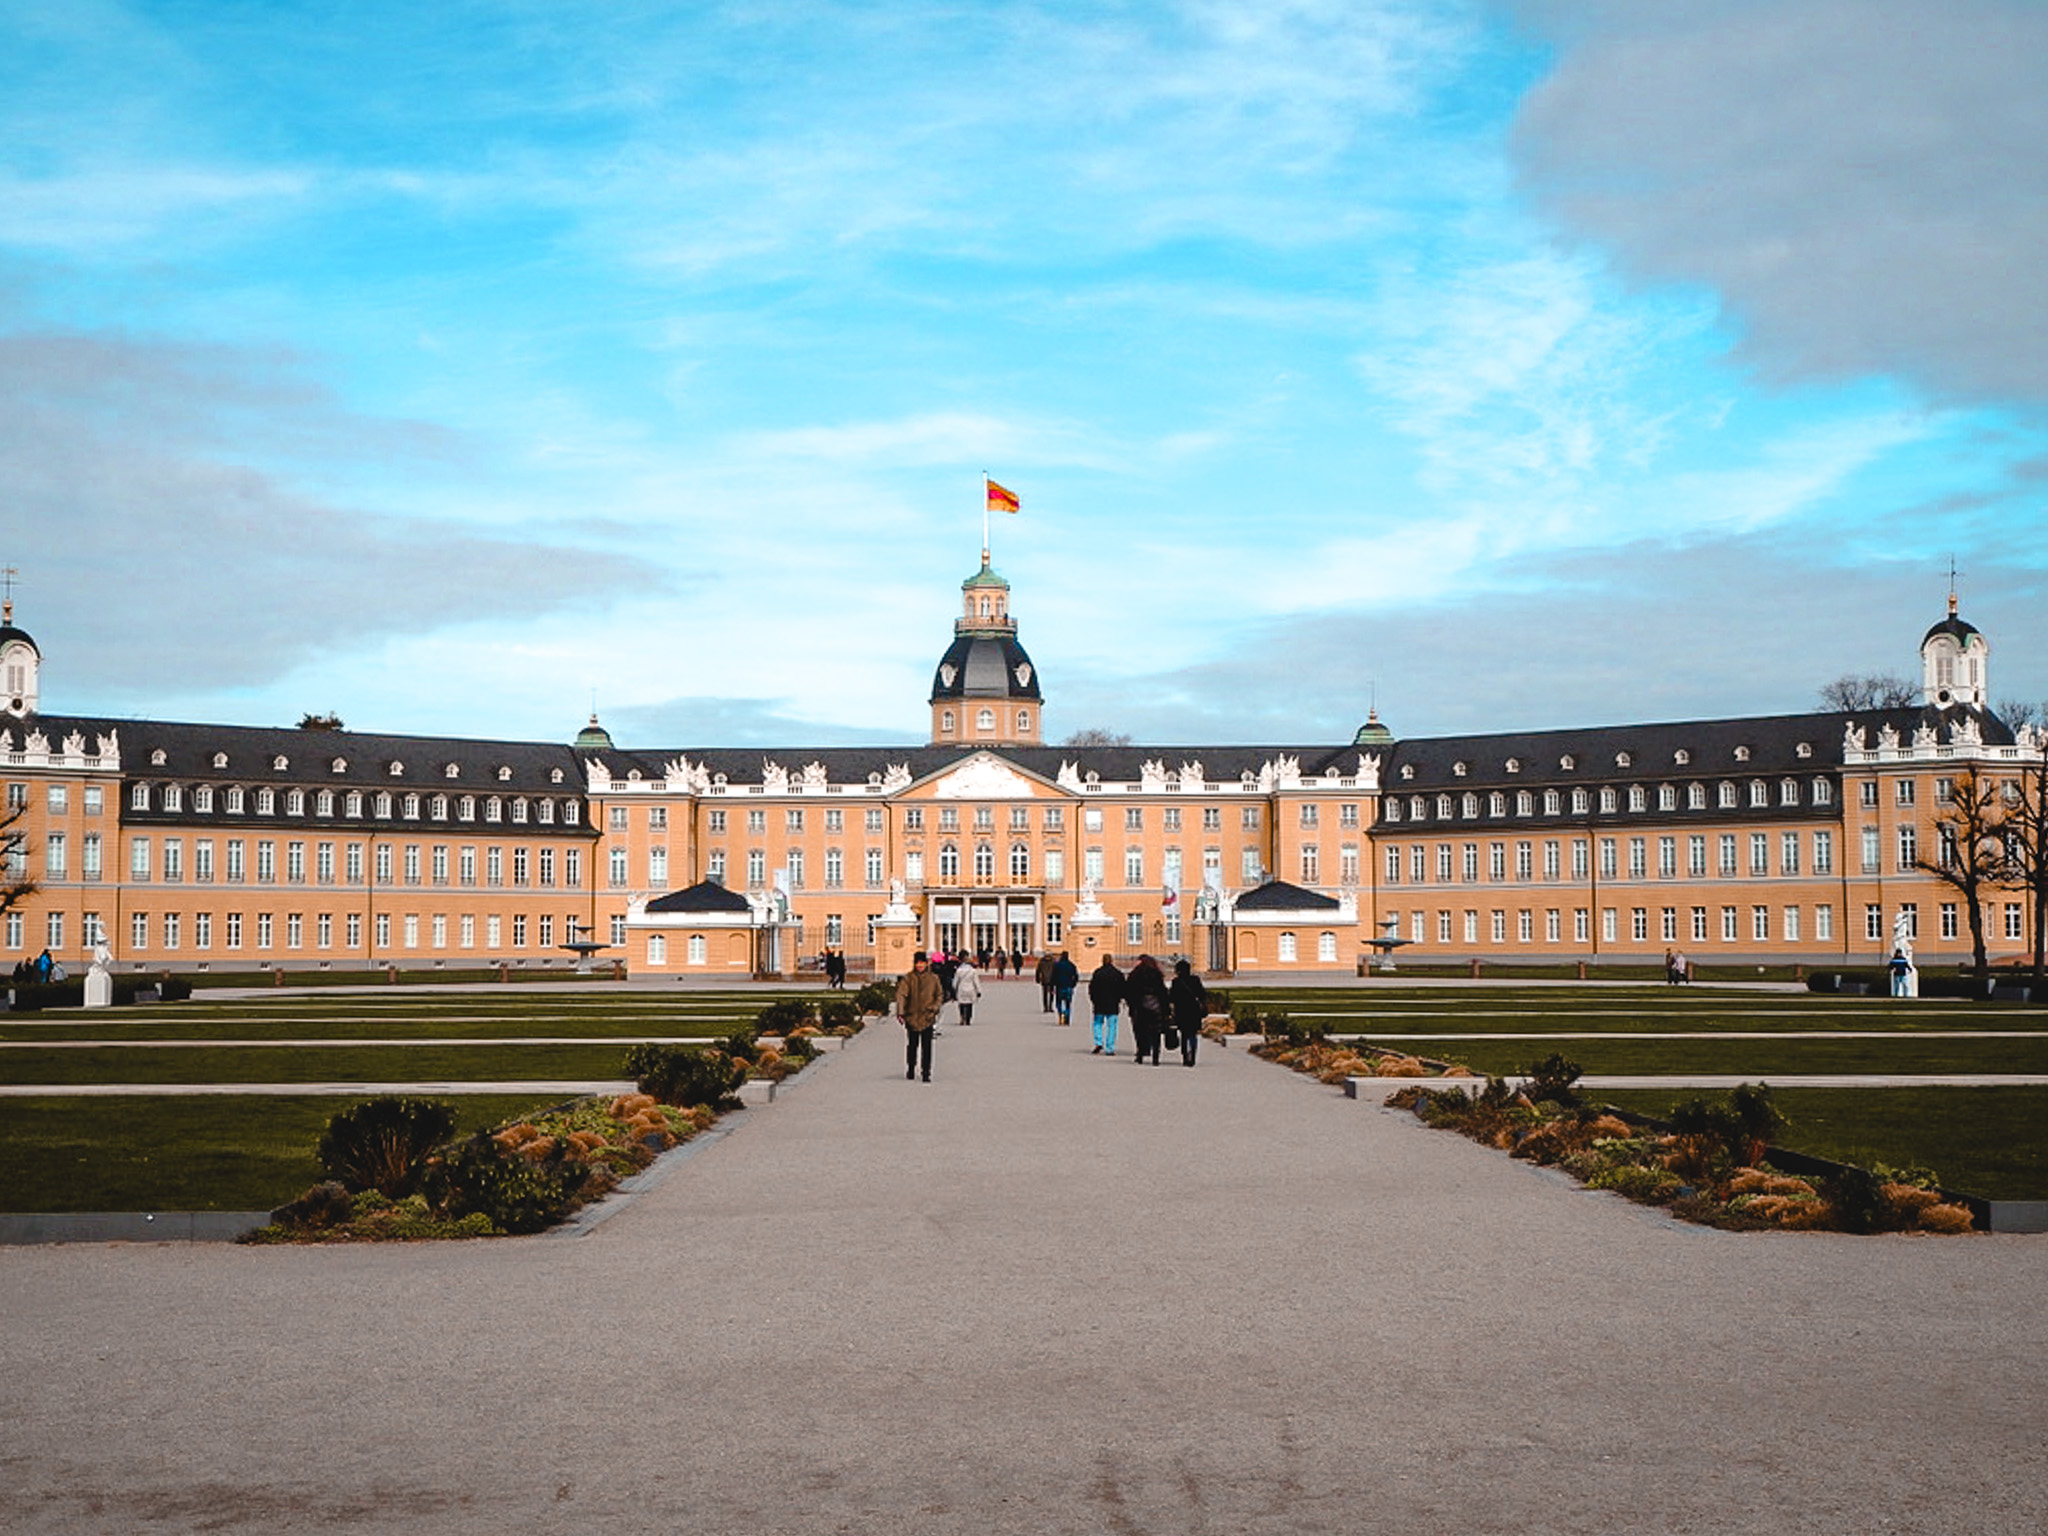 Karlsruhe Schloss